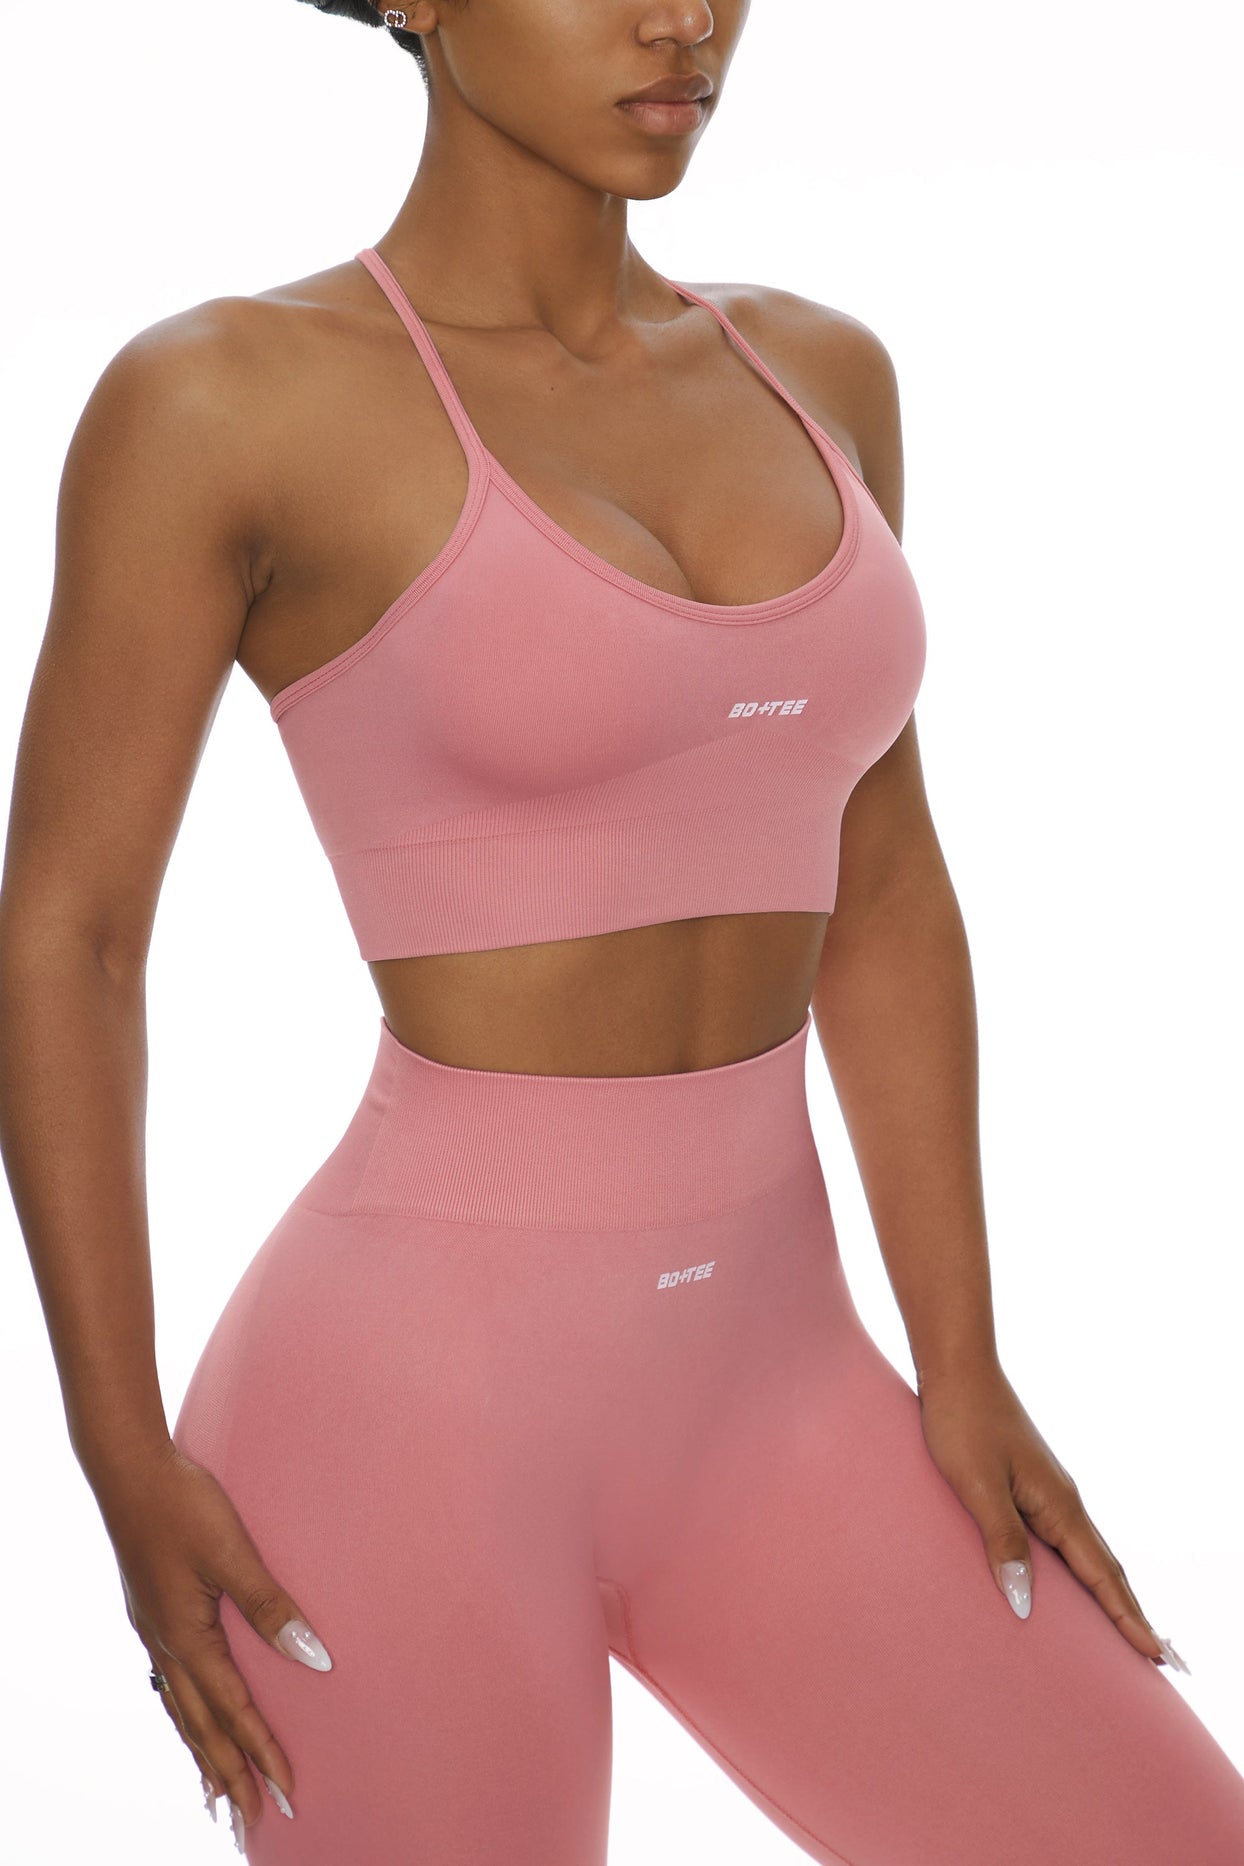 Bo + Tee 4 6 Sports Bra Pink Halter Padded Support Gym Training